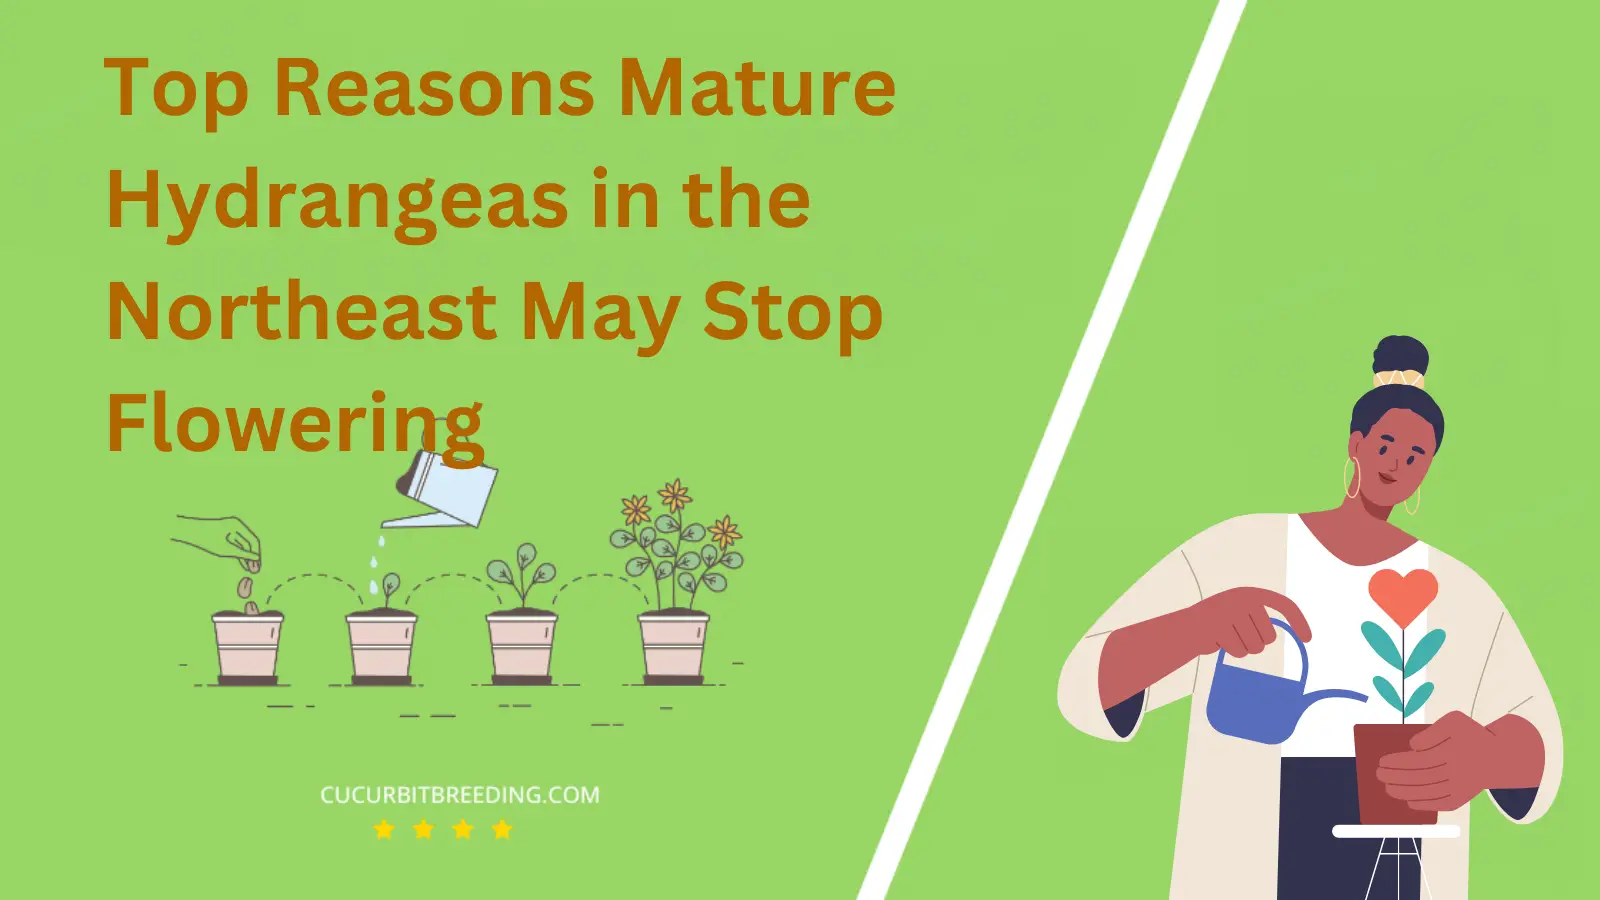 Top Reasons Mature Hydrangeas in the Northeast May Stop Flowering